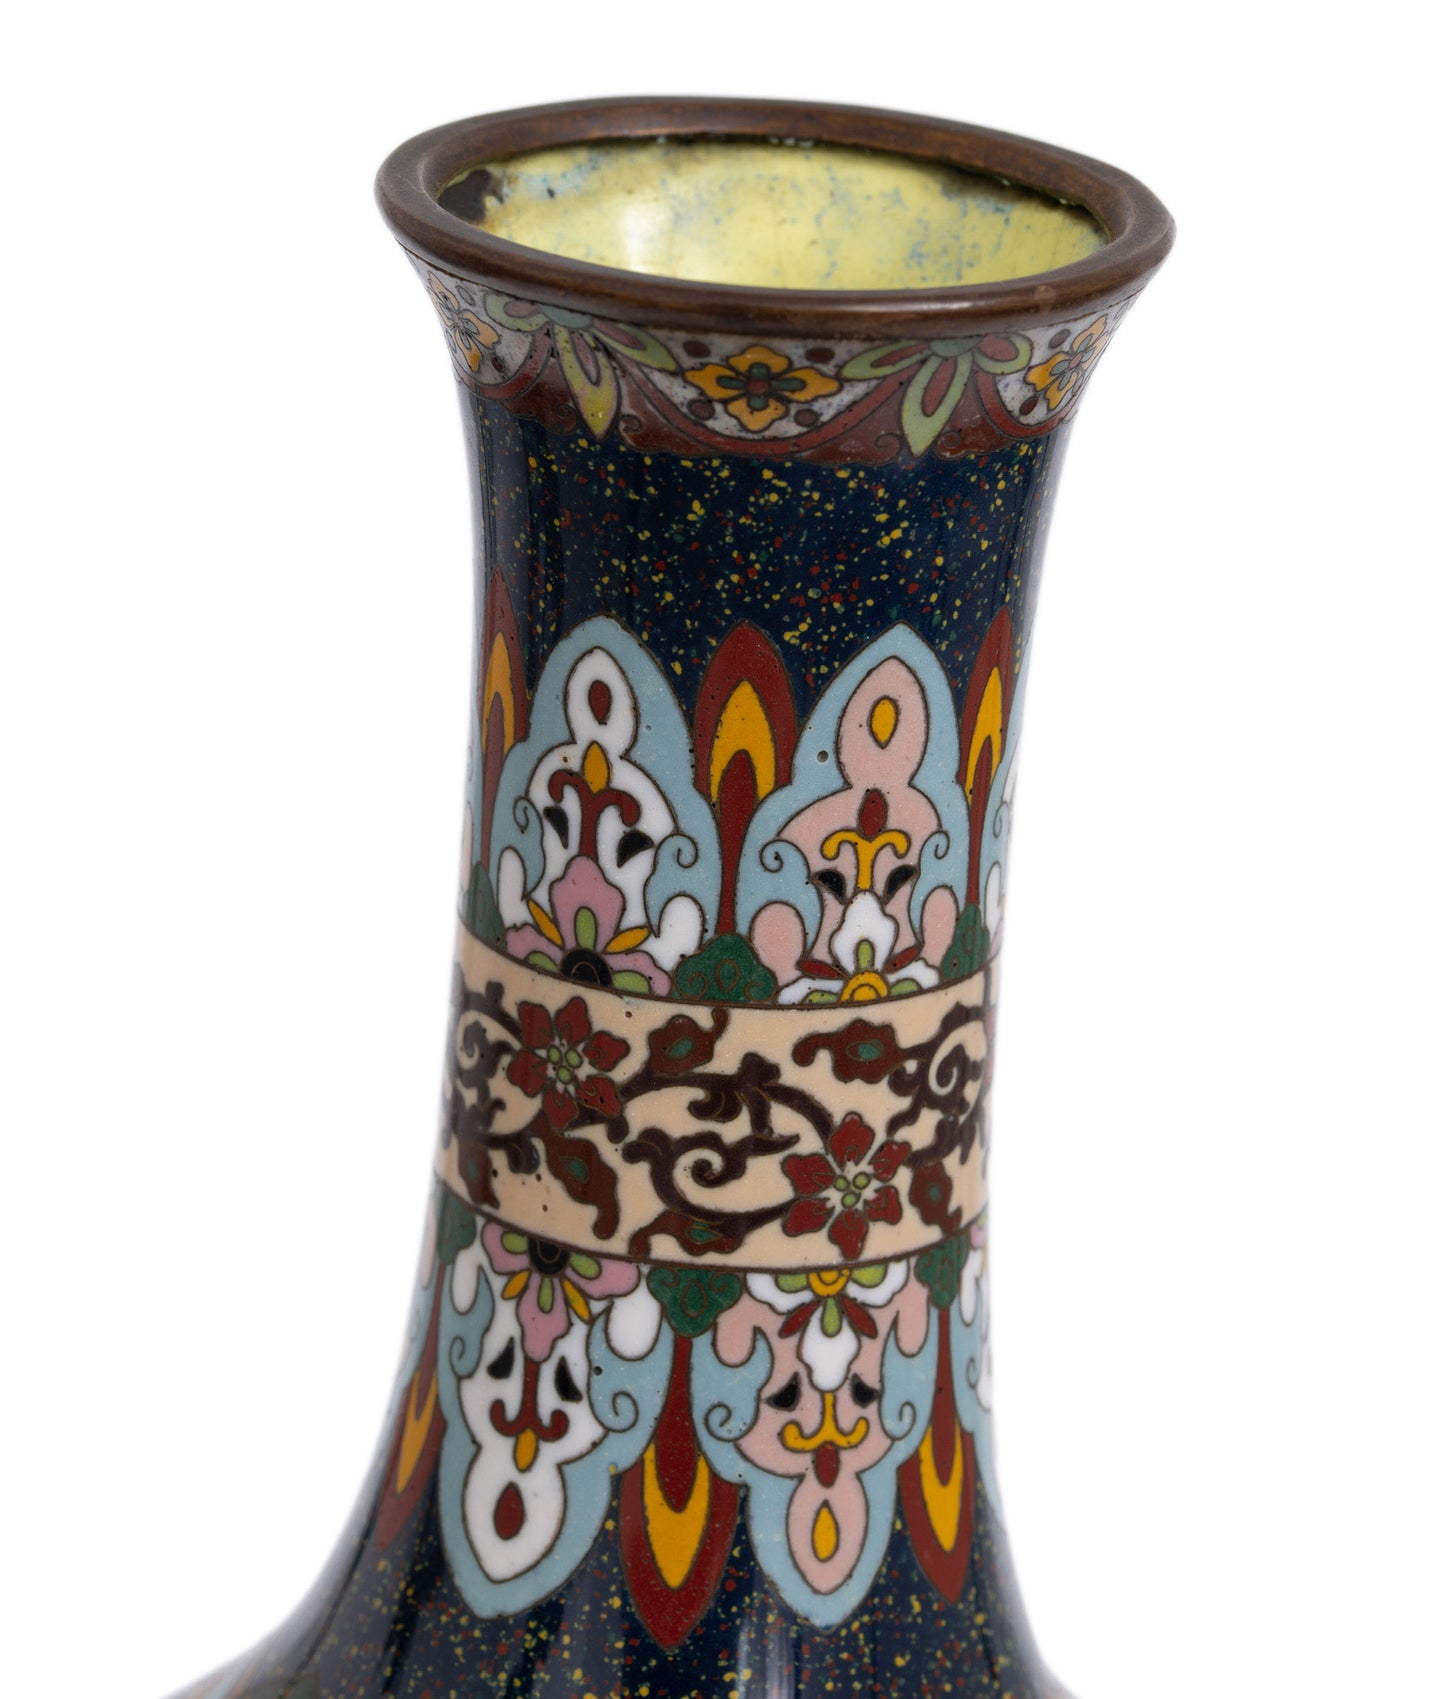 Antique Japanese Cloisonne Enamel Vase with Dragons and Ho-ho Birds (Code 2798)